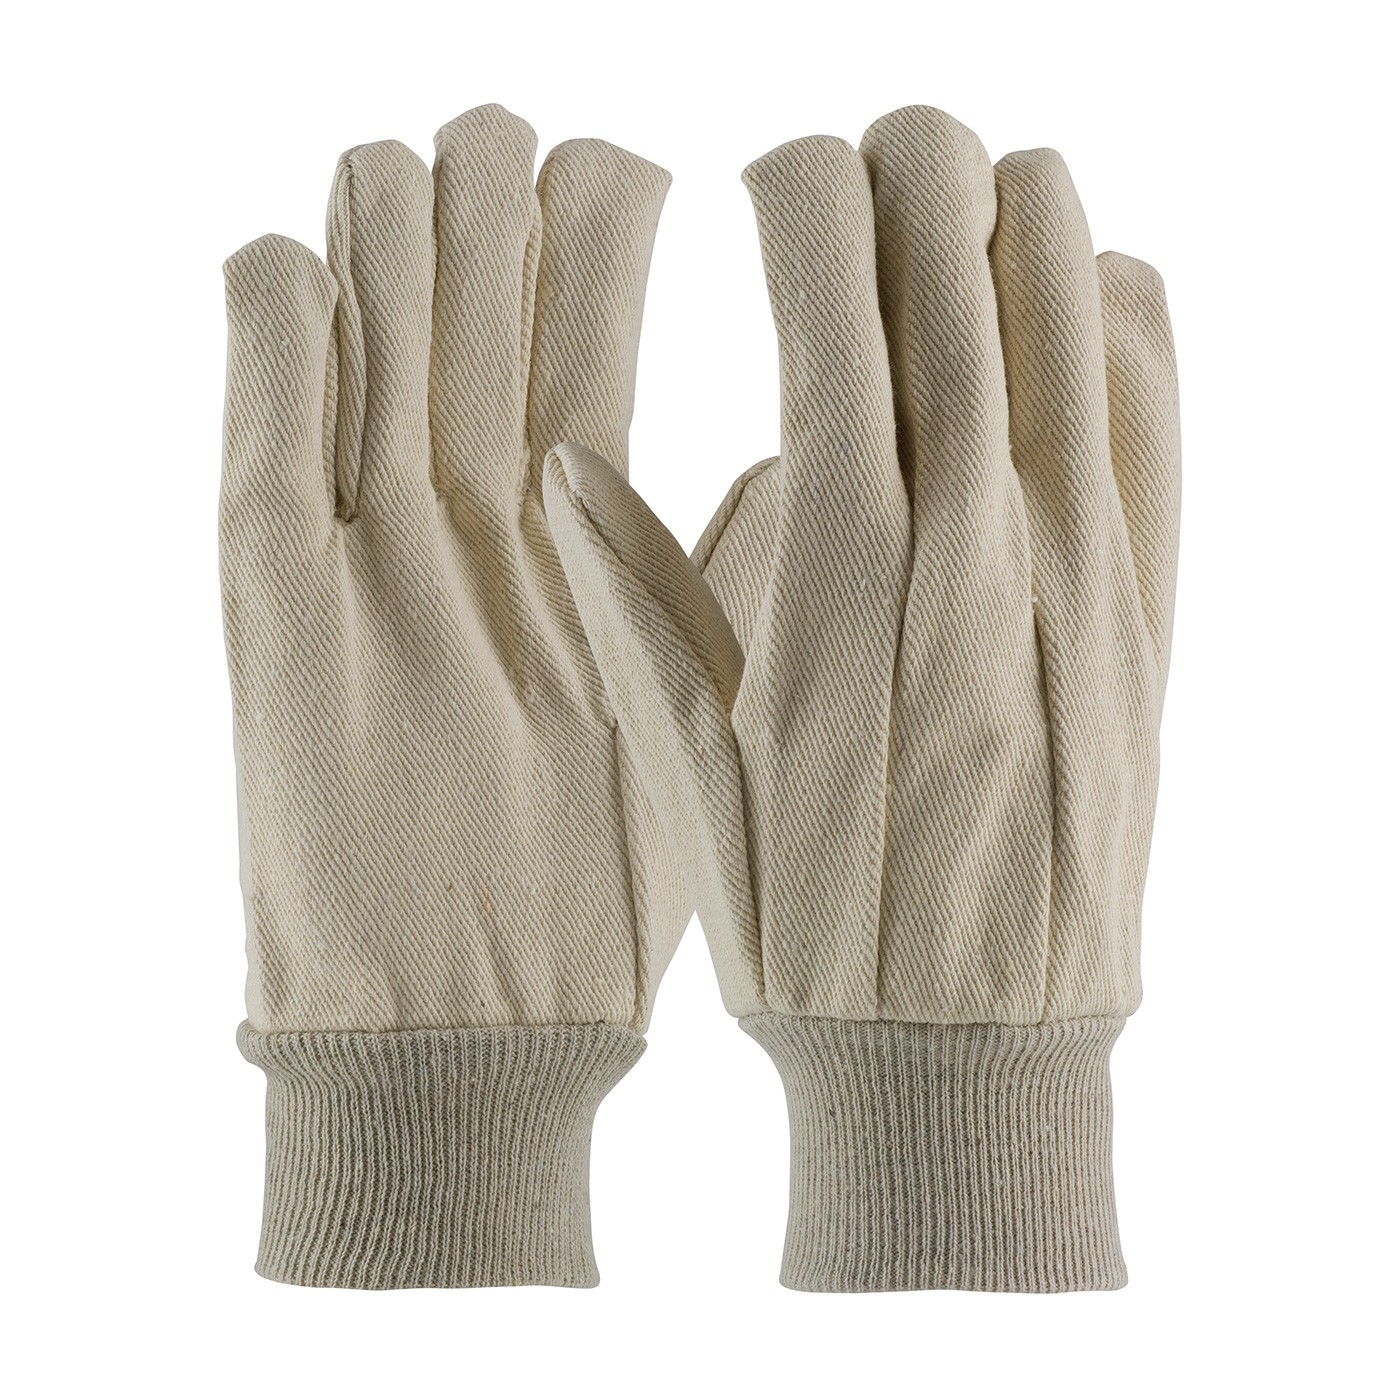 PIP® Premium Grade Cotton Canvas Single Palm Glove - Knitwrist  (#90-912)